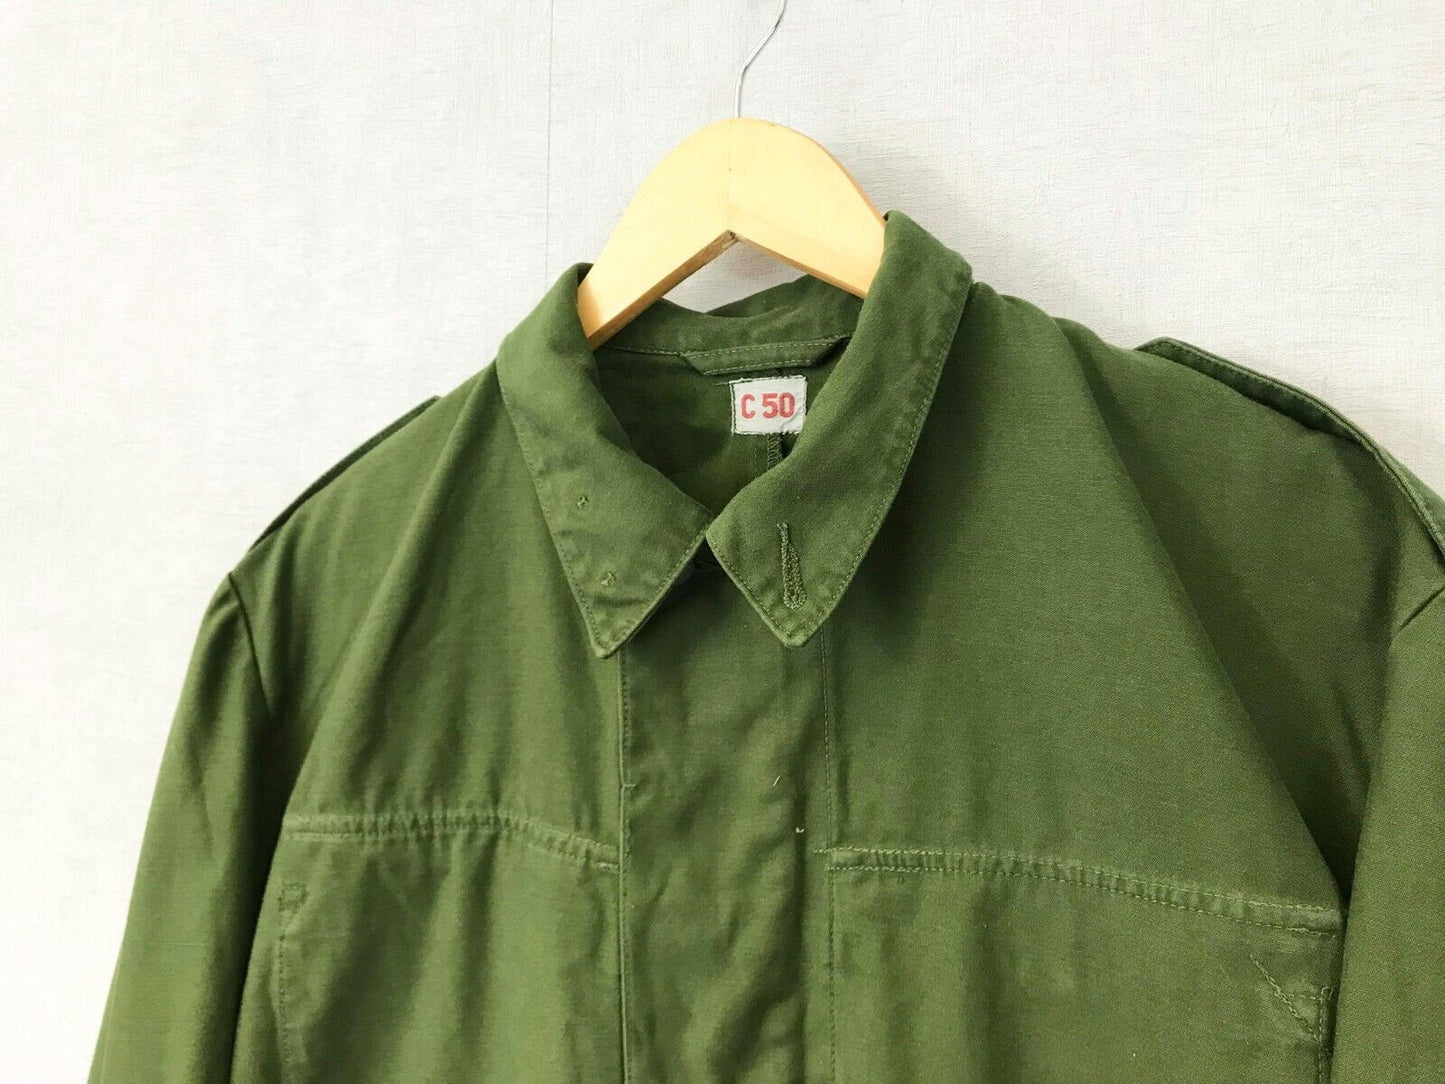 Vintage Army Green Chore Jacket